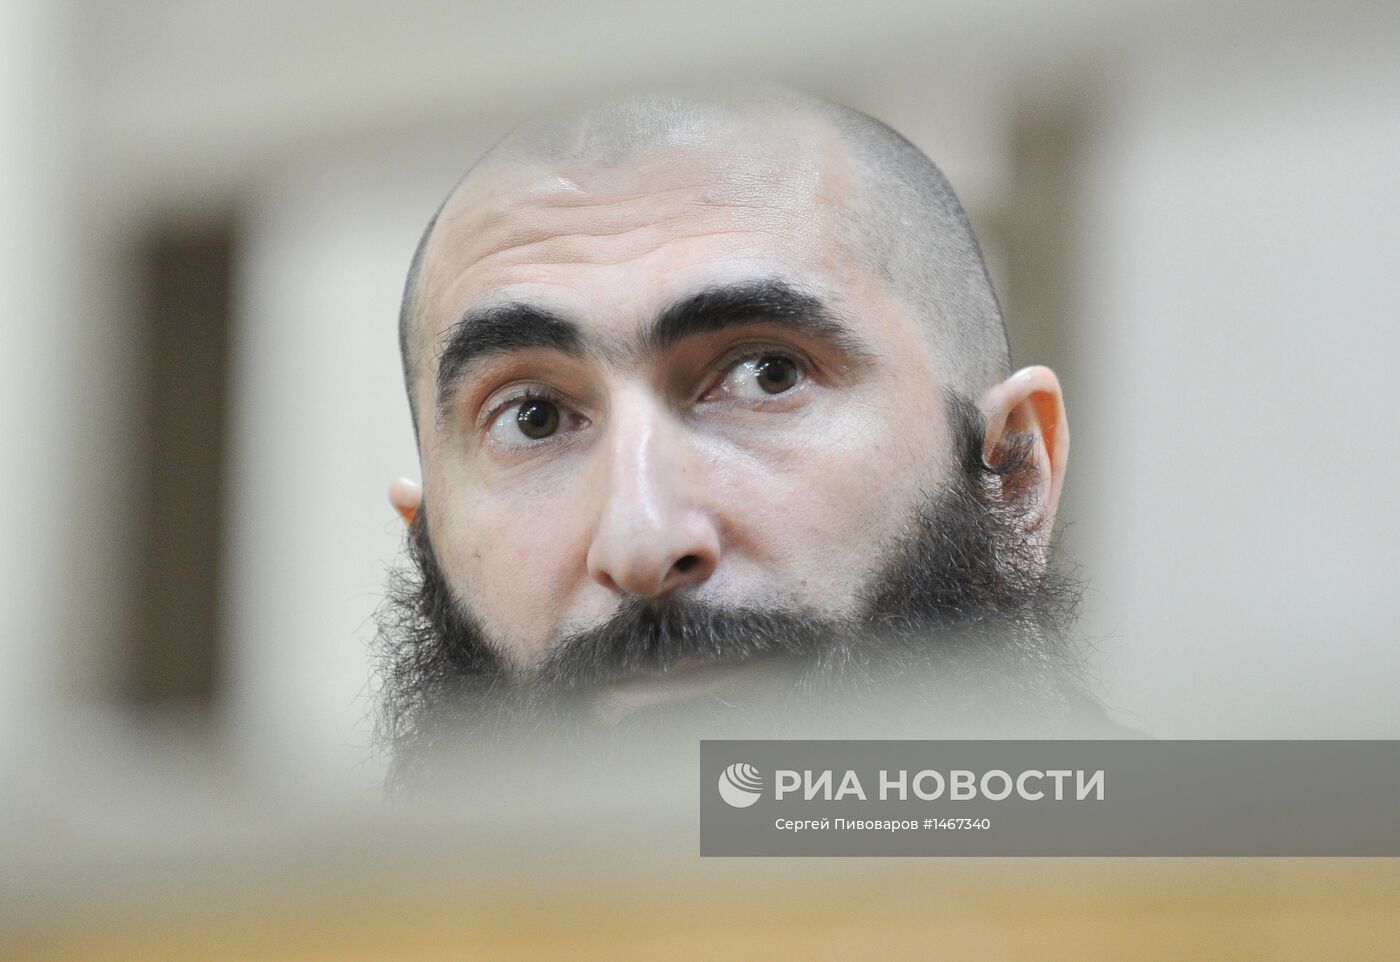 Заседание суда по делу террориста Али Тазиева